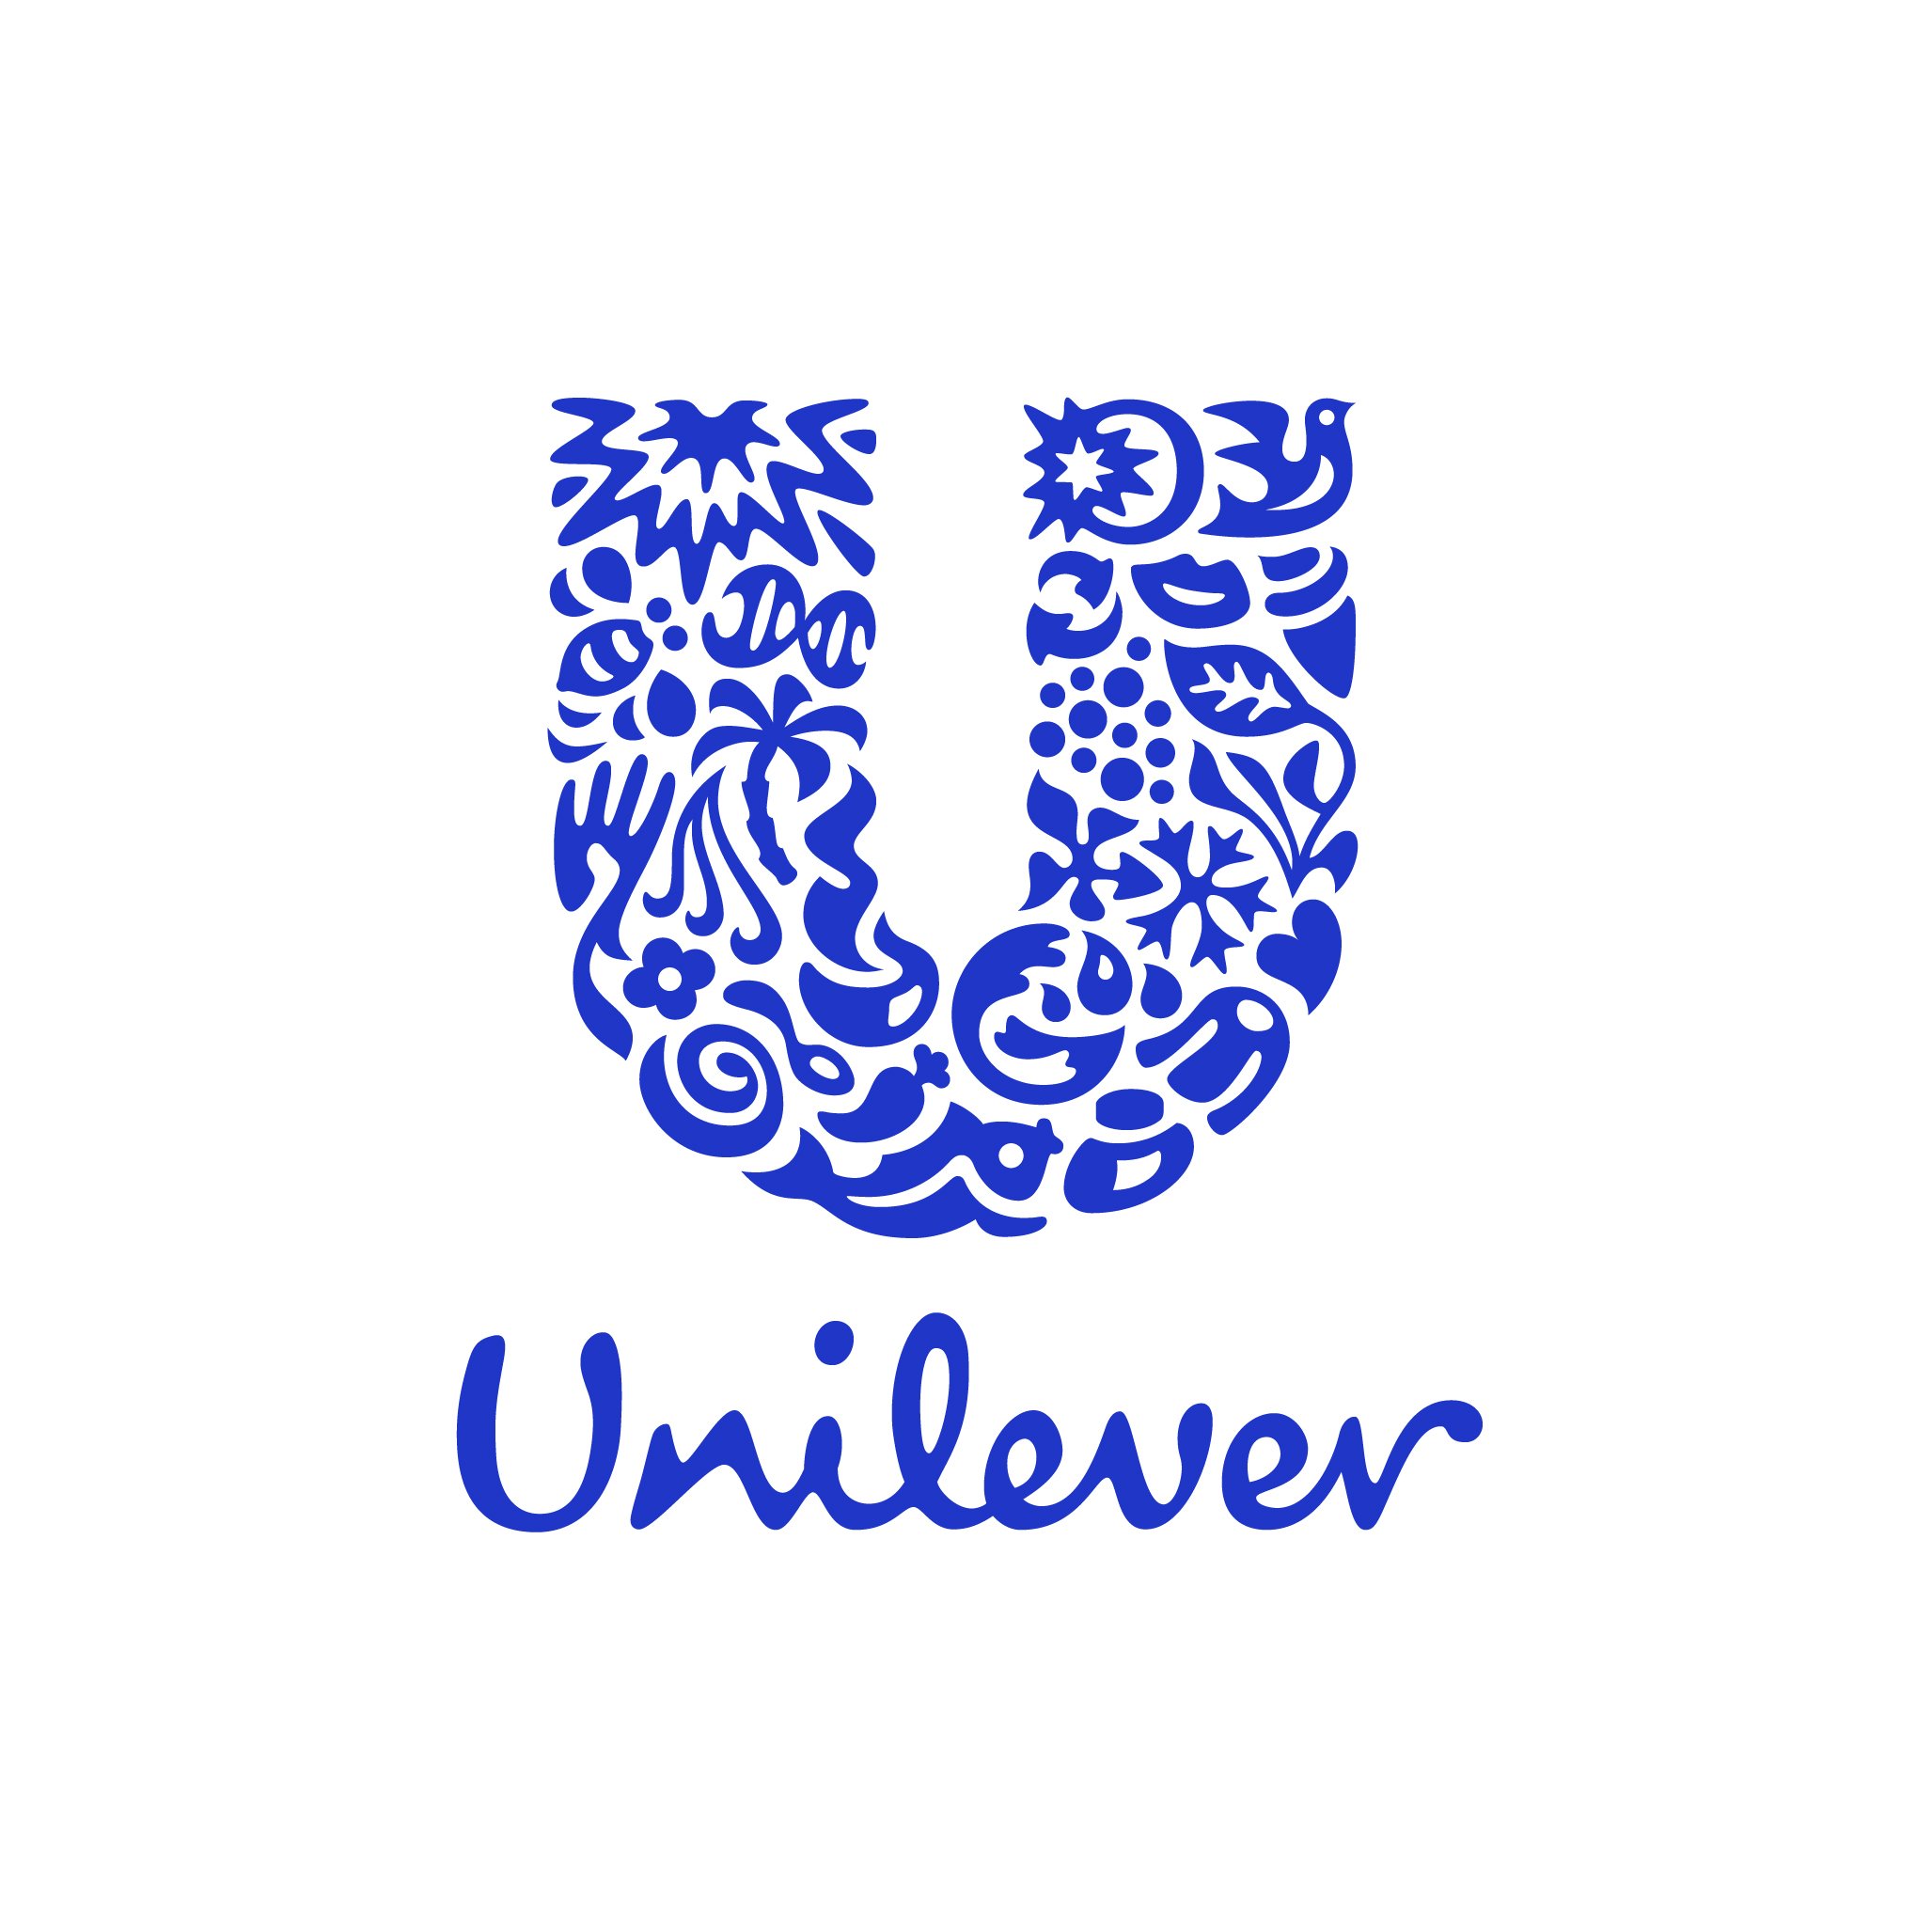 معاون مدیر تحقیق و توسعه | R&D Assistant Manager - Packaging - یونیلیور | Unilever Iran